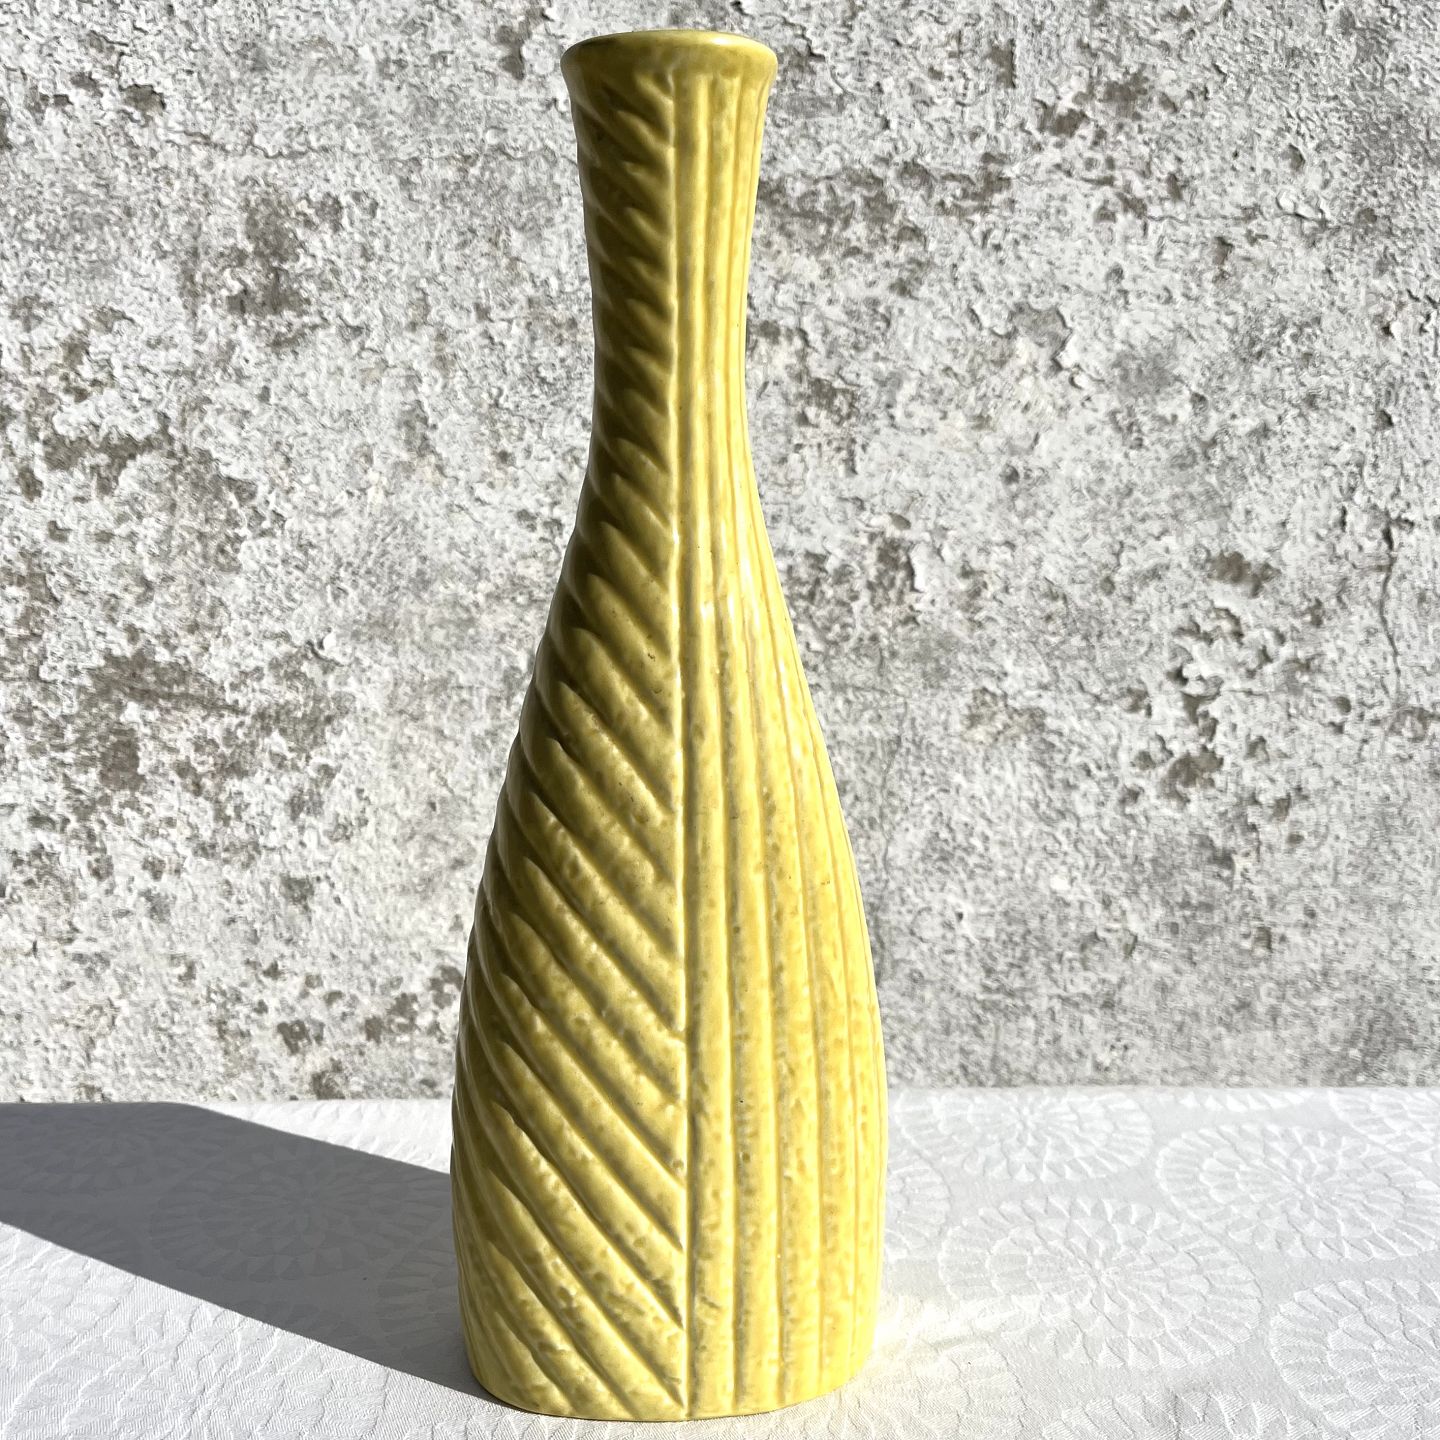 Moster Olga Antik & Design - Rörstrand Yellow retro vase * *DKK - Rörstrand * Yellow retro vase * *DKK 800